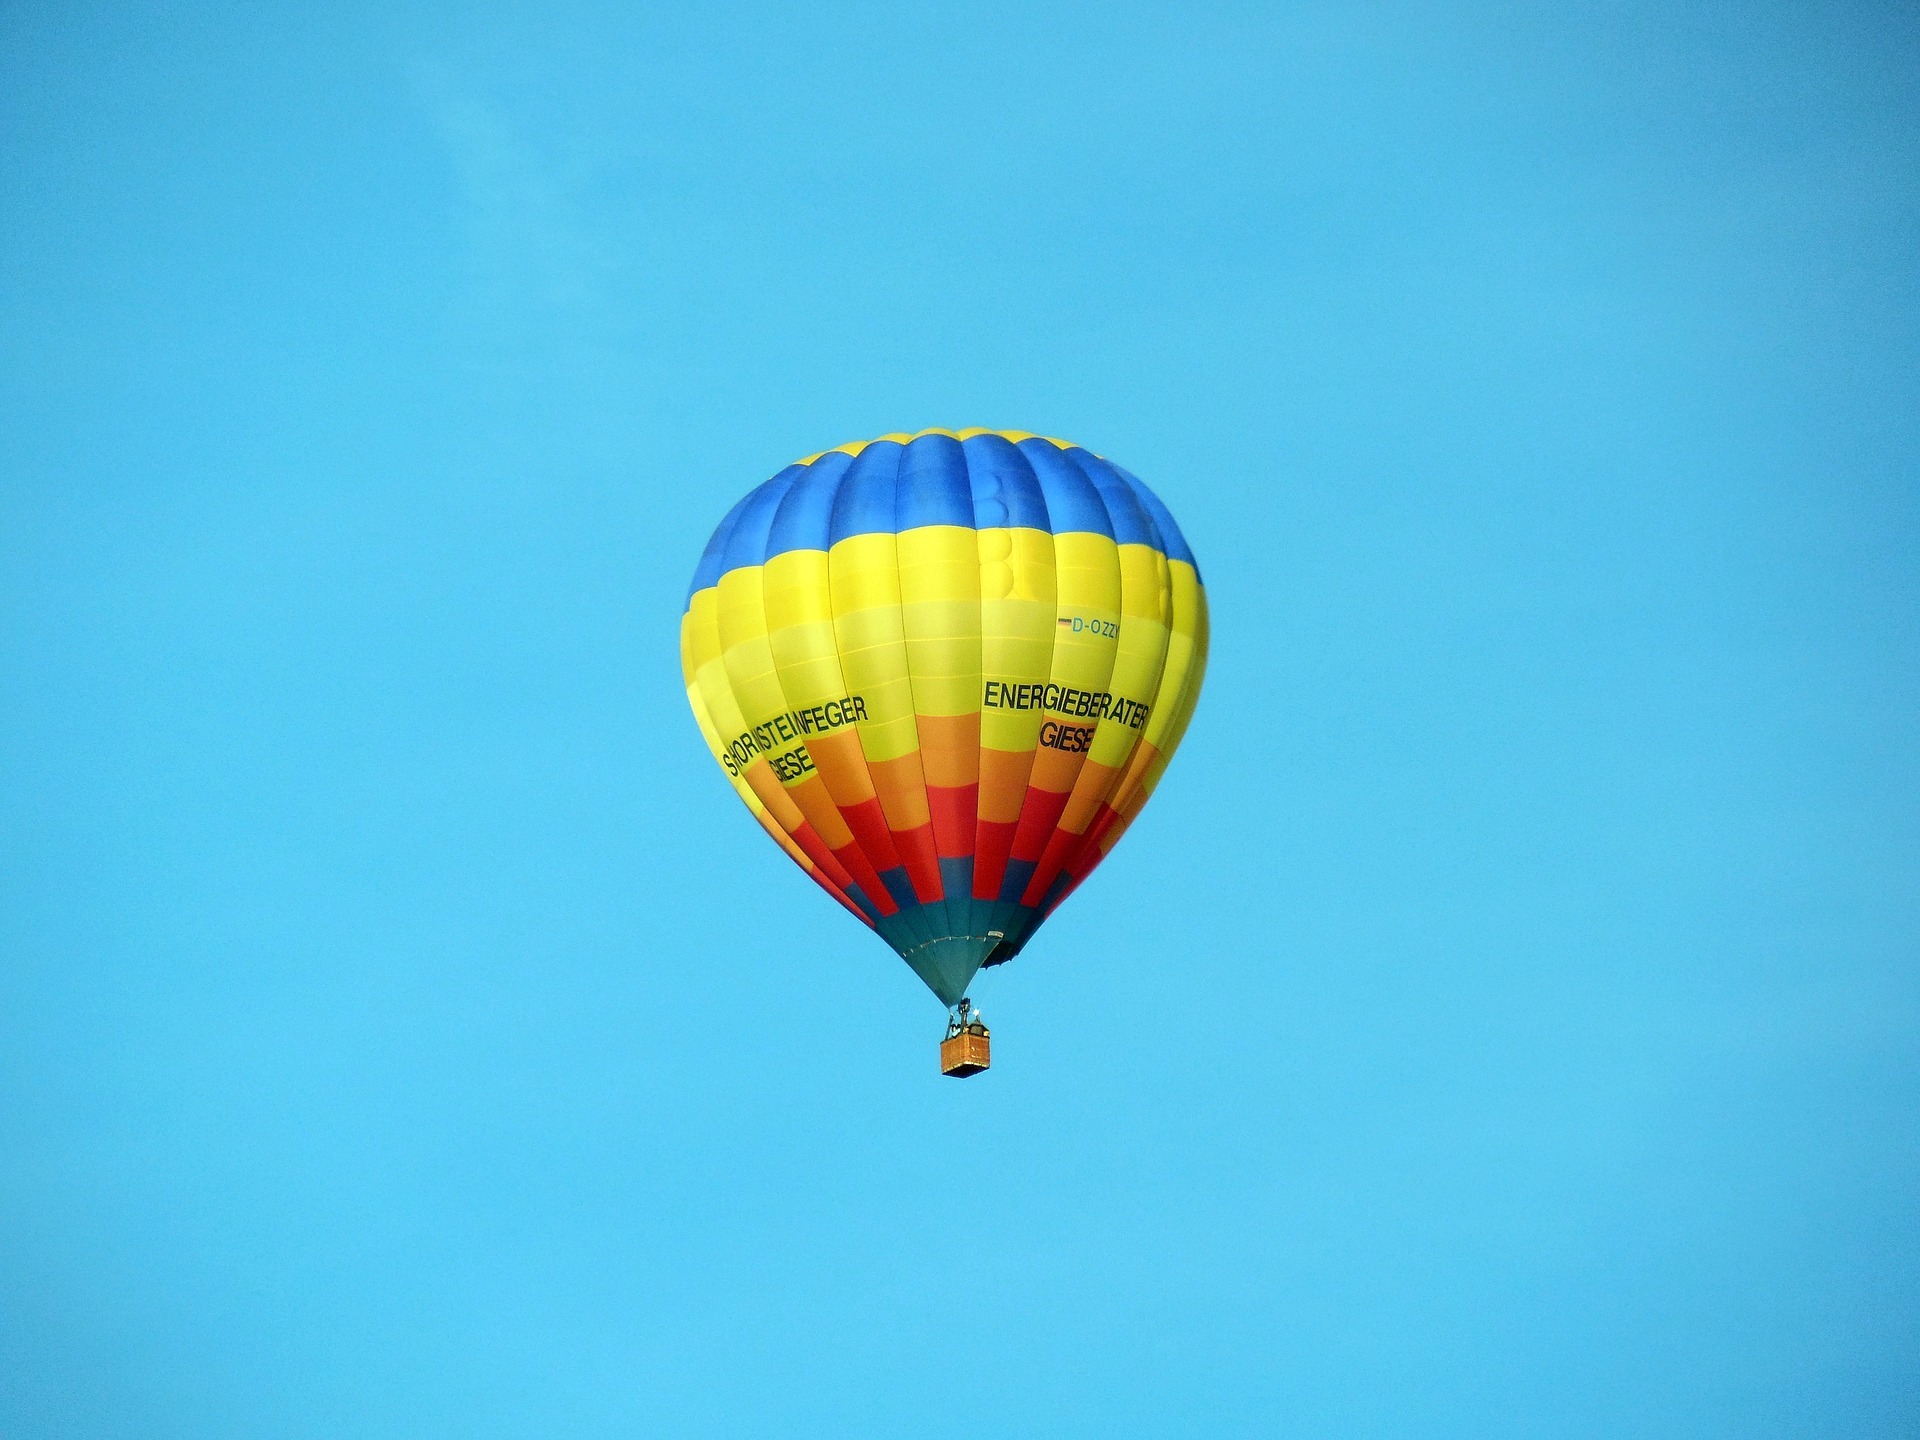 Ballonfahrt Saarland, Heißluftballon am Himmel